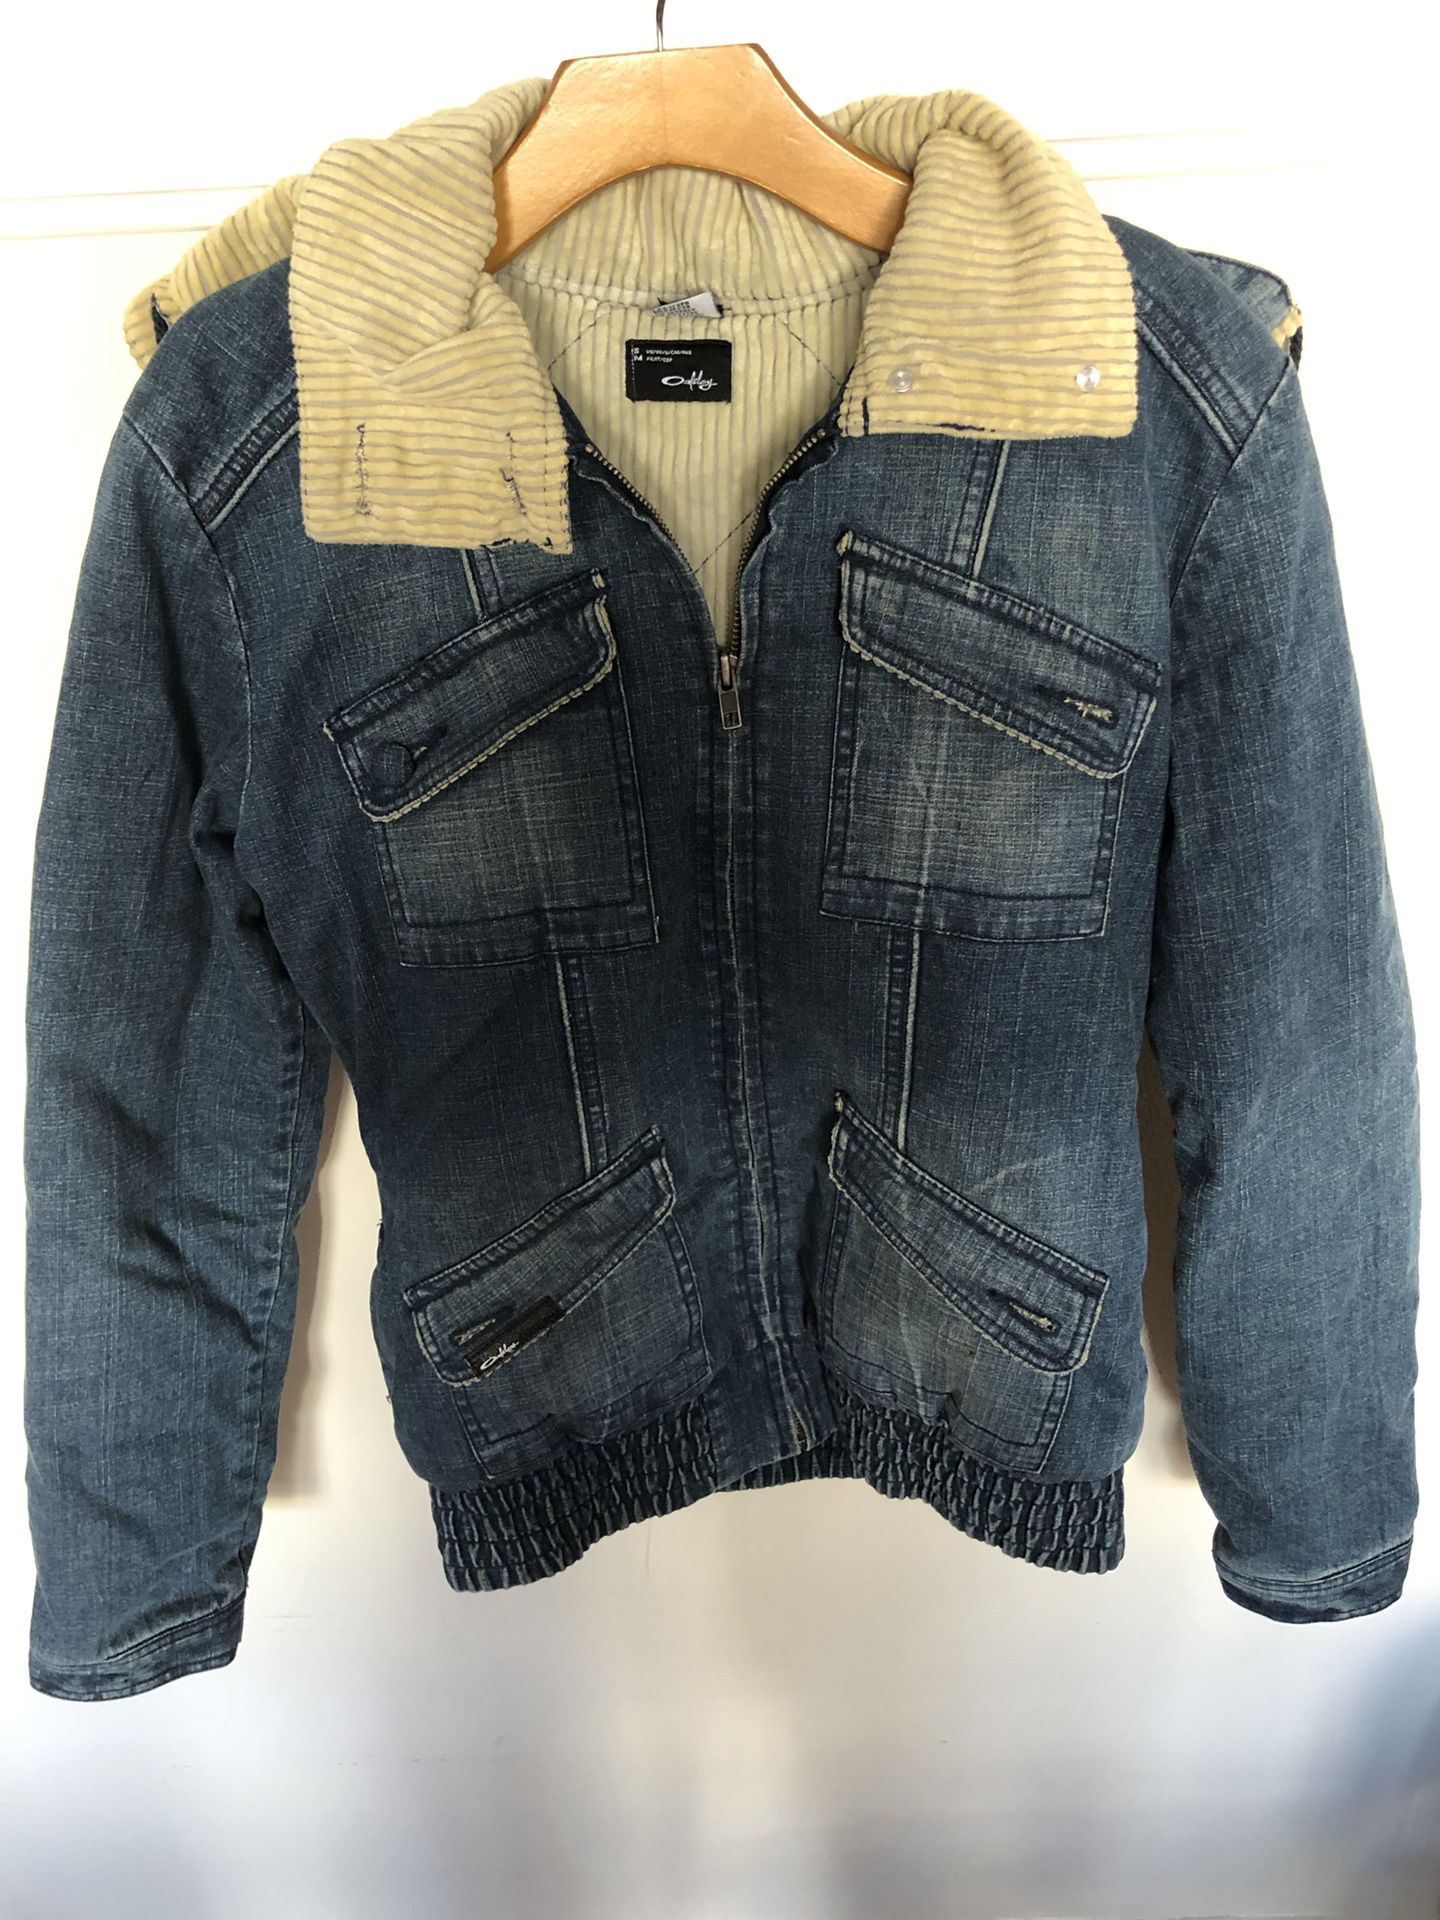 100% authentic Oakley Jean jacket size S/M